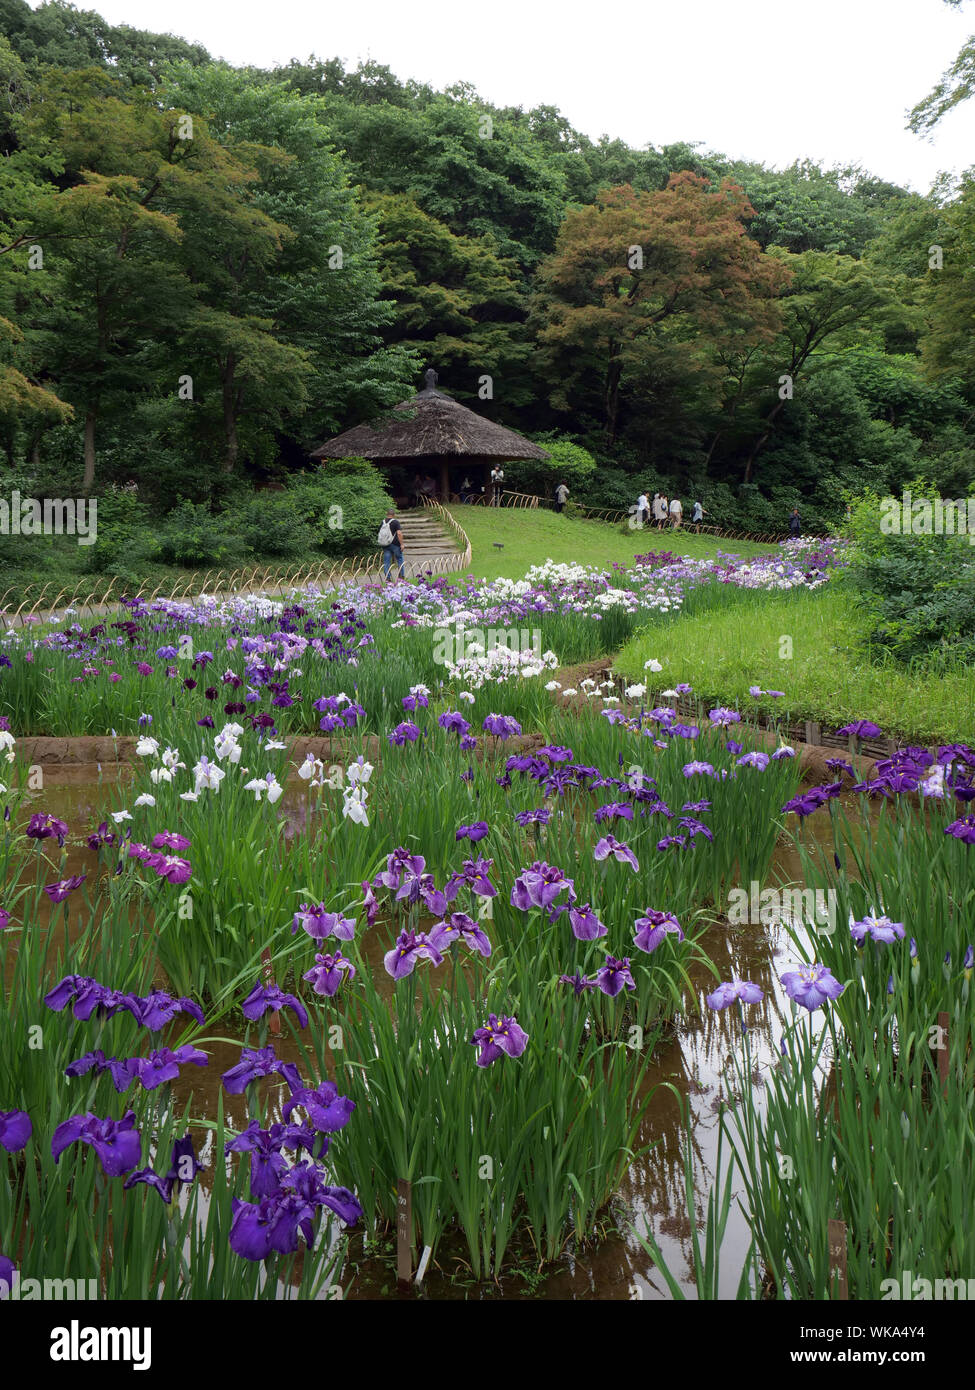 JAPAN - photo by Sean Sprague  Meiji Jingu Shinto shrine and gardens, Harajuku, Tokyo. The iris garden. Stock Photo